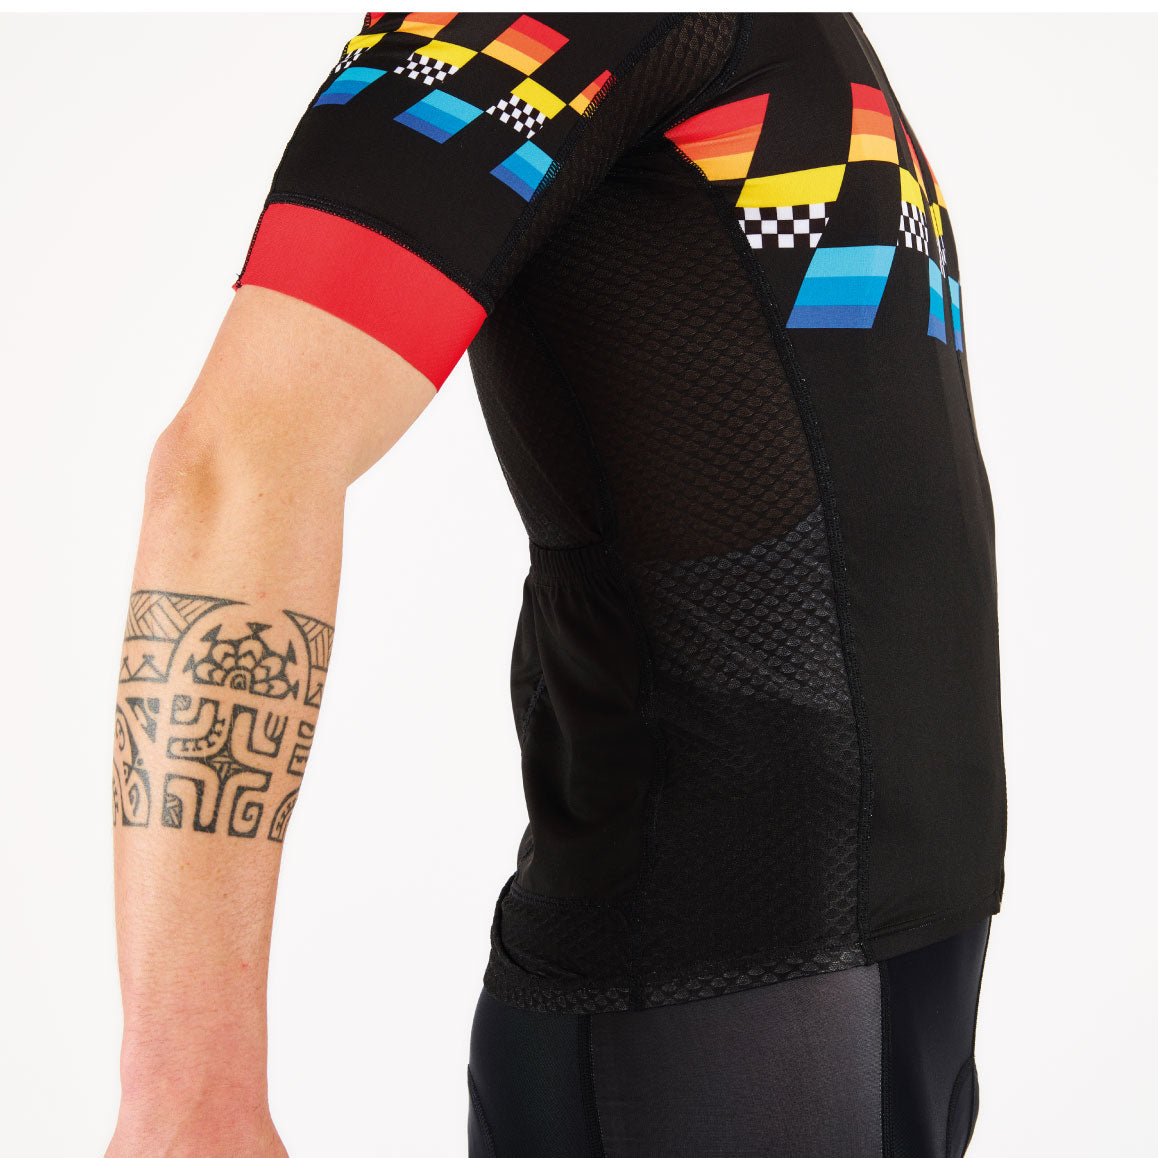 maillot vélo homme avec tissu mesh respirant évacuation de transpiration